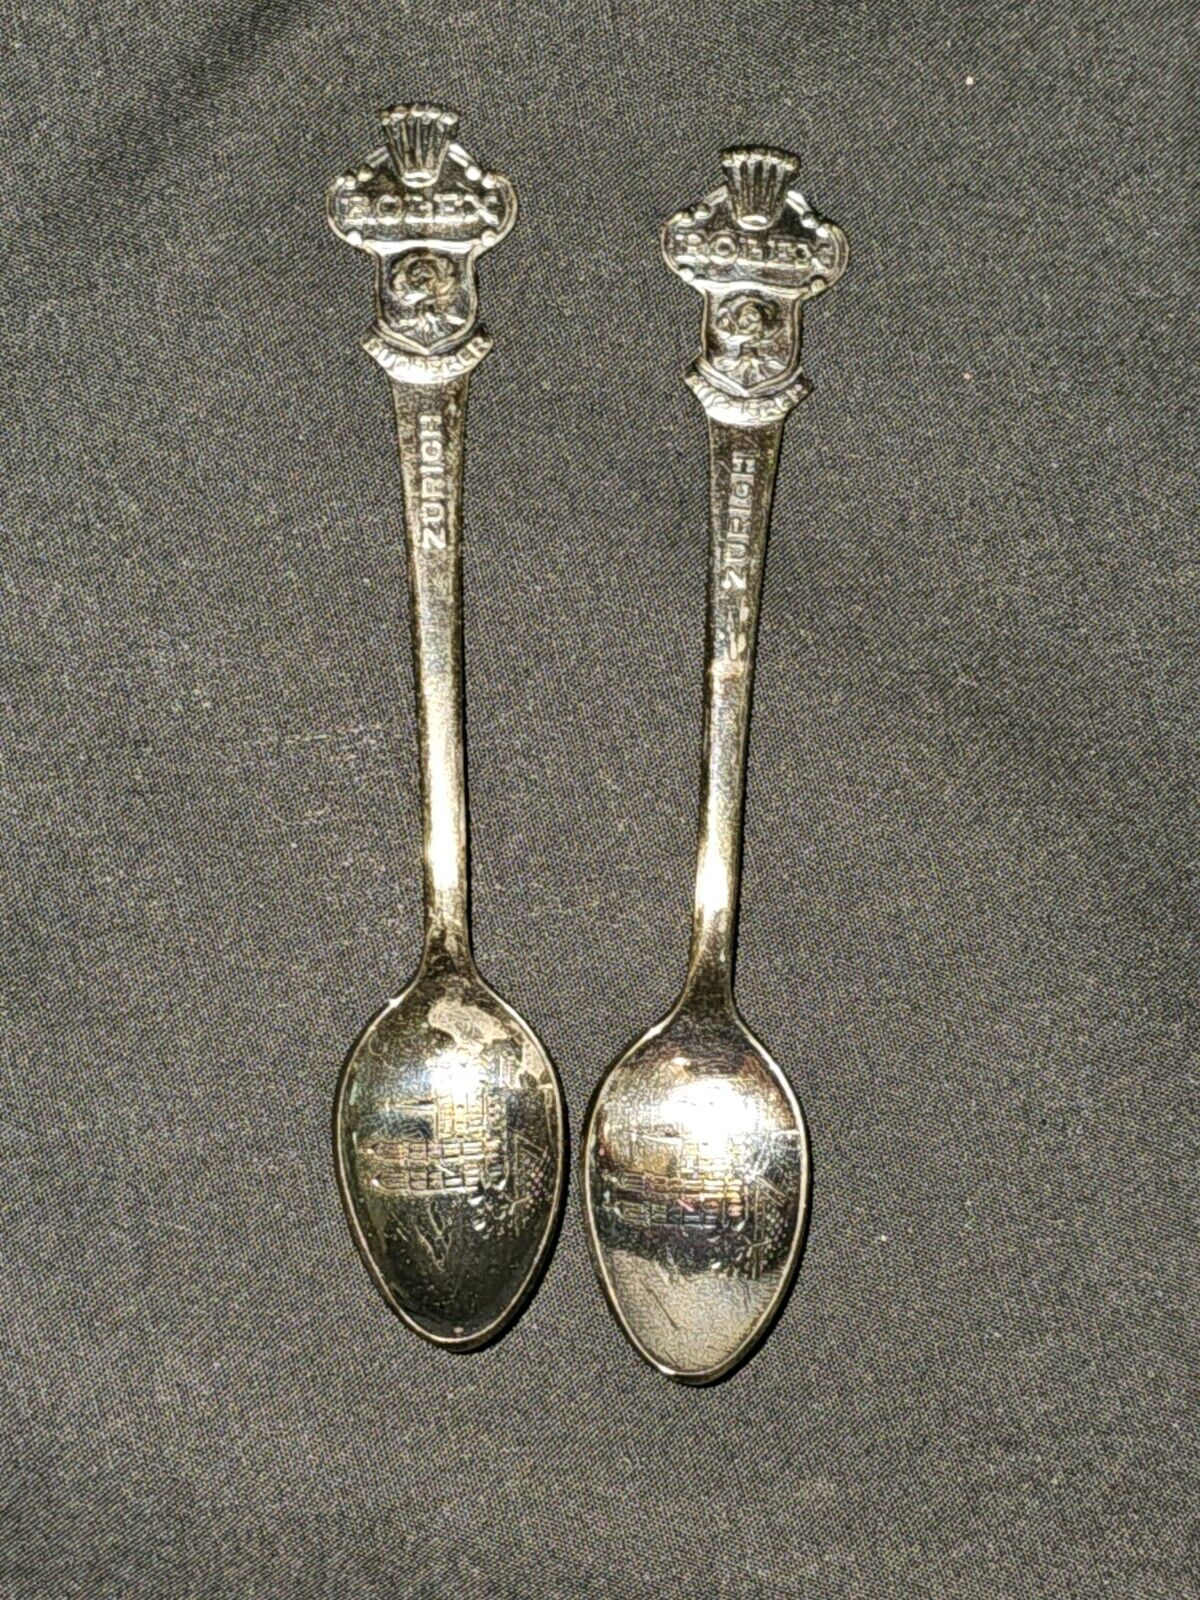 Vintage Zurich Rolex Collectors Spoons